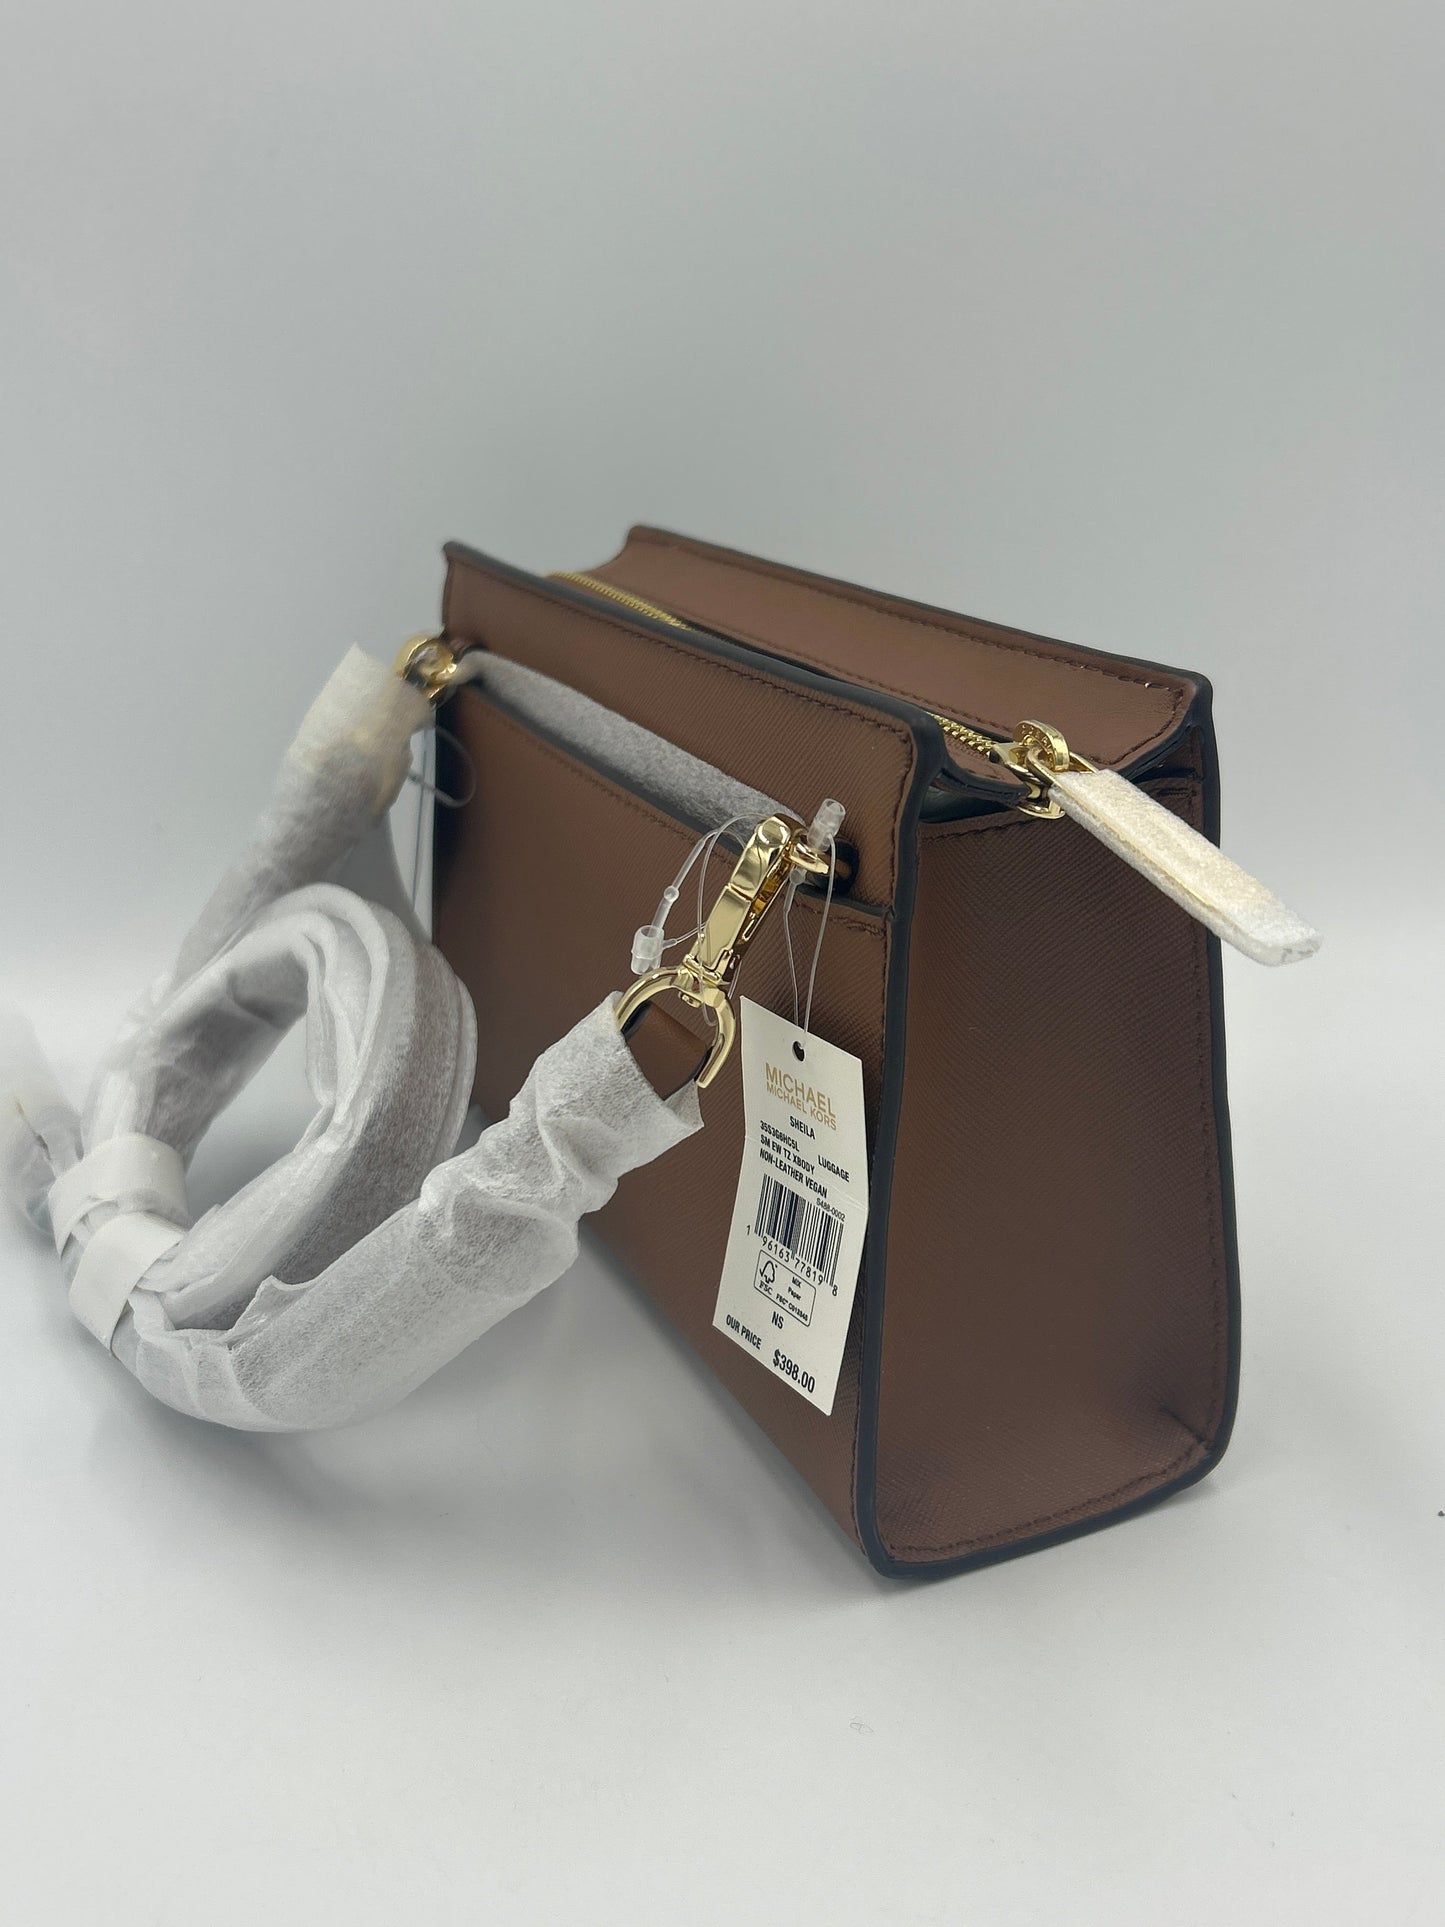 New! Michael Kors Sheila Handbag / Crossbody Designer